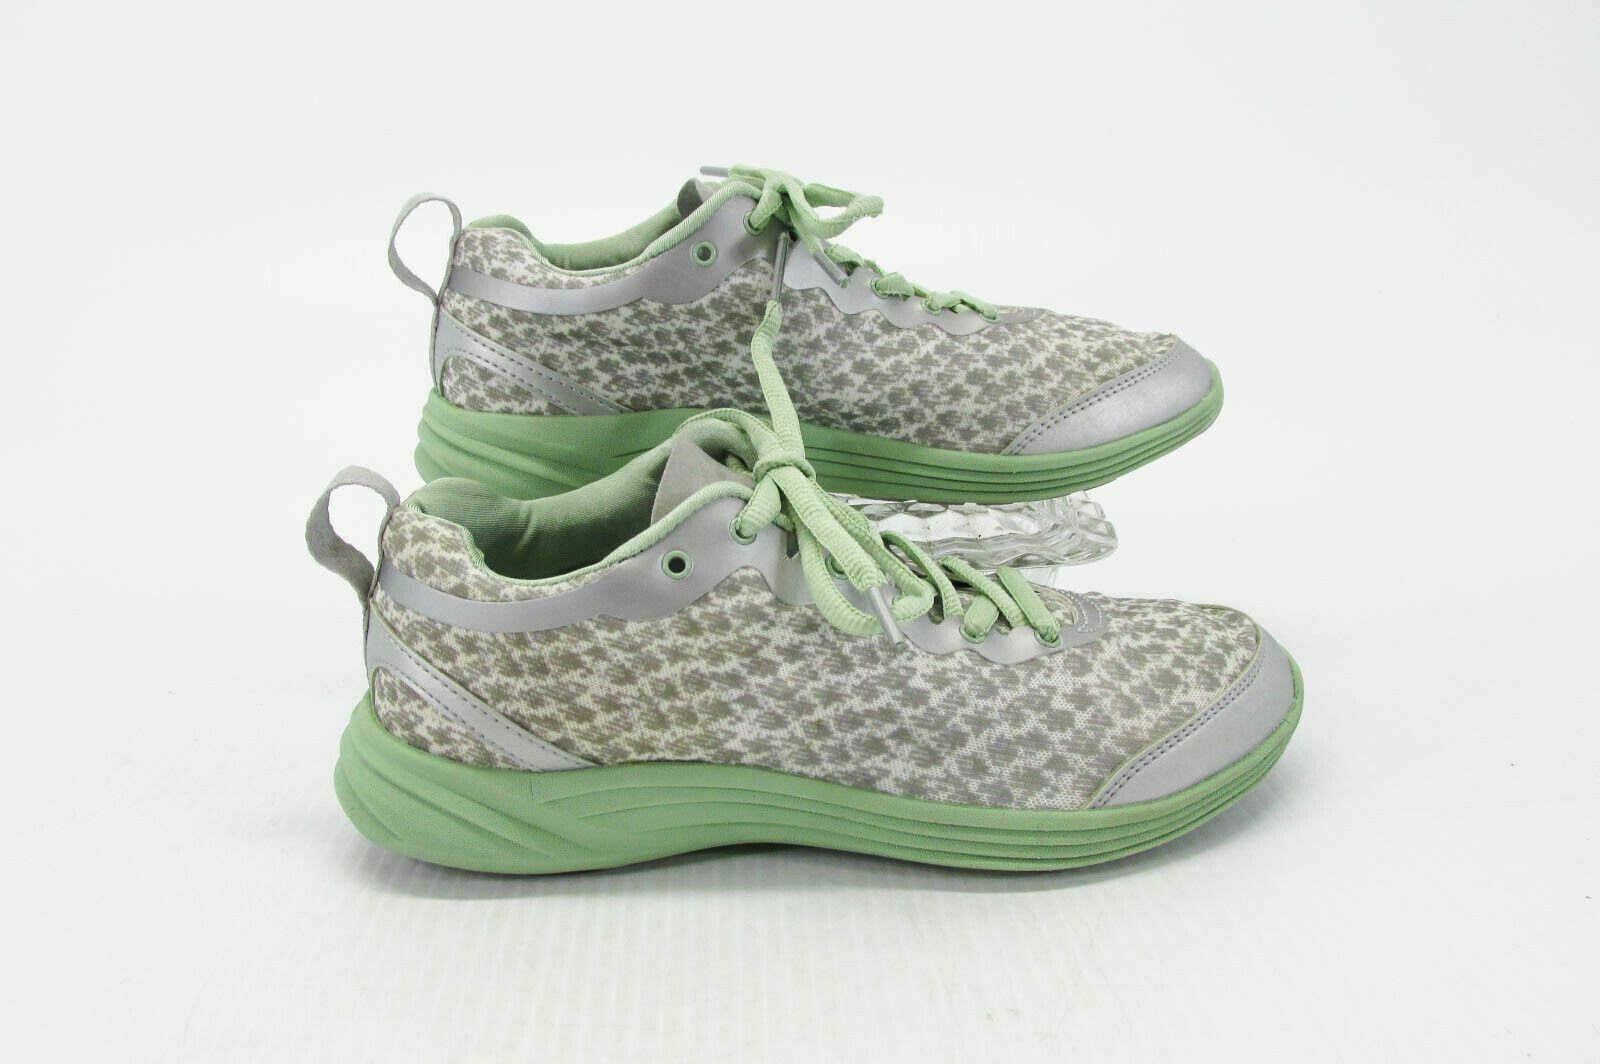 Vionic Women Shoe Python Size 7.5M Sneaker Athletic Fitness Walking Pre Owned yq